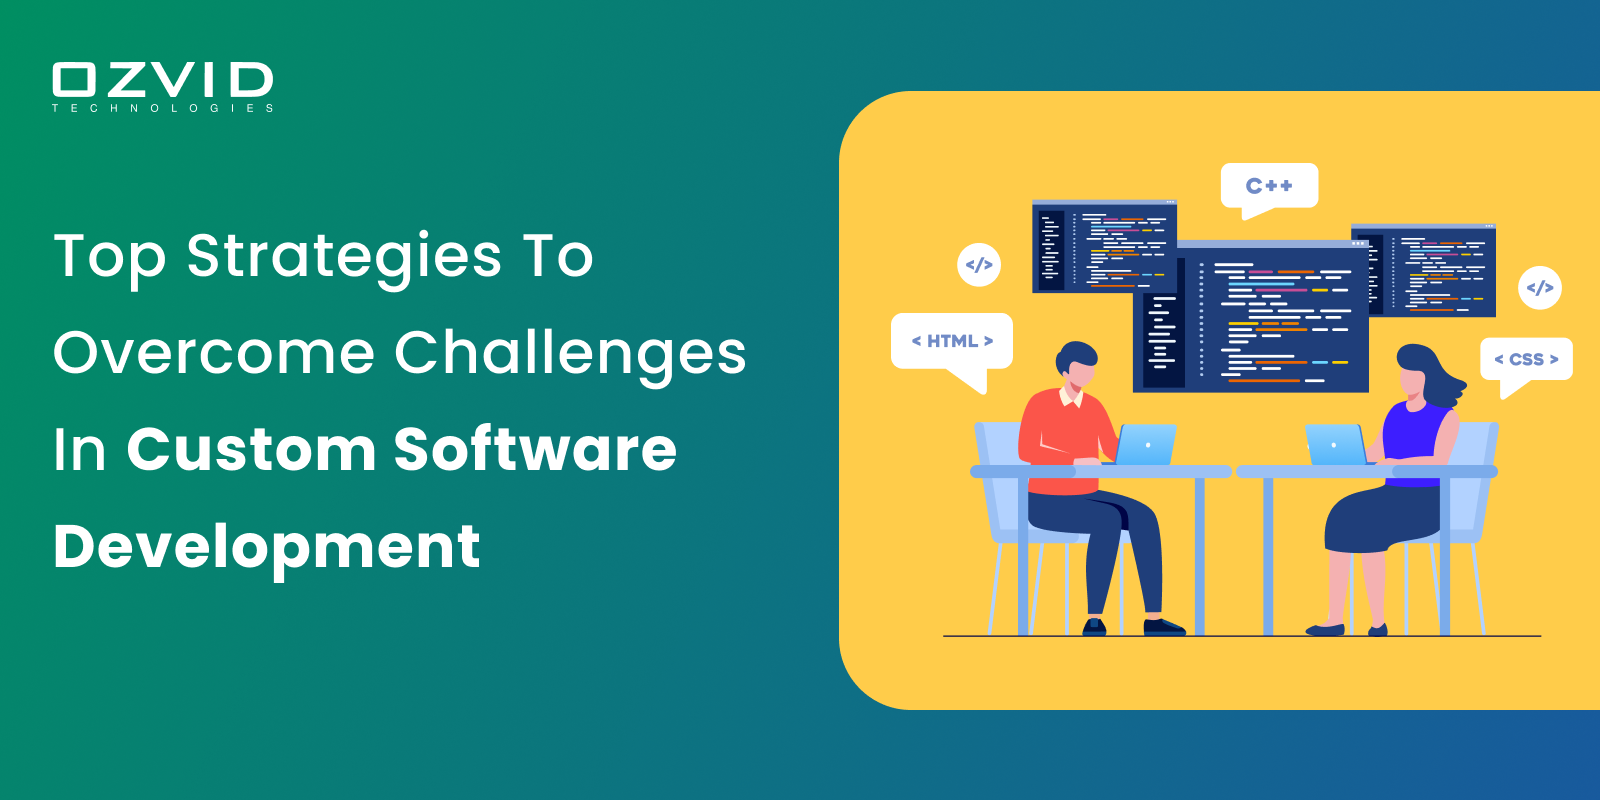 Top Strategies to Overcome Challenges in Custom Software Development